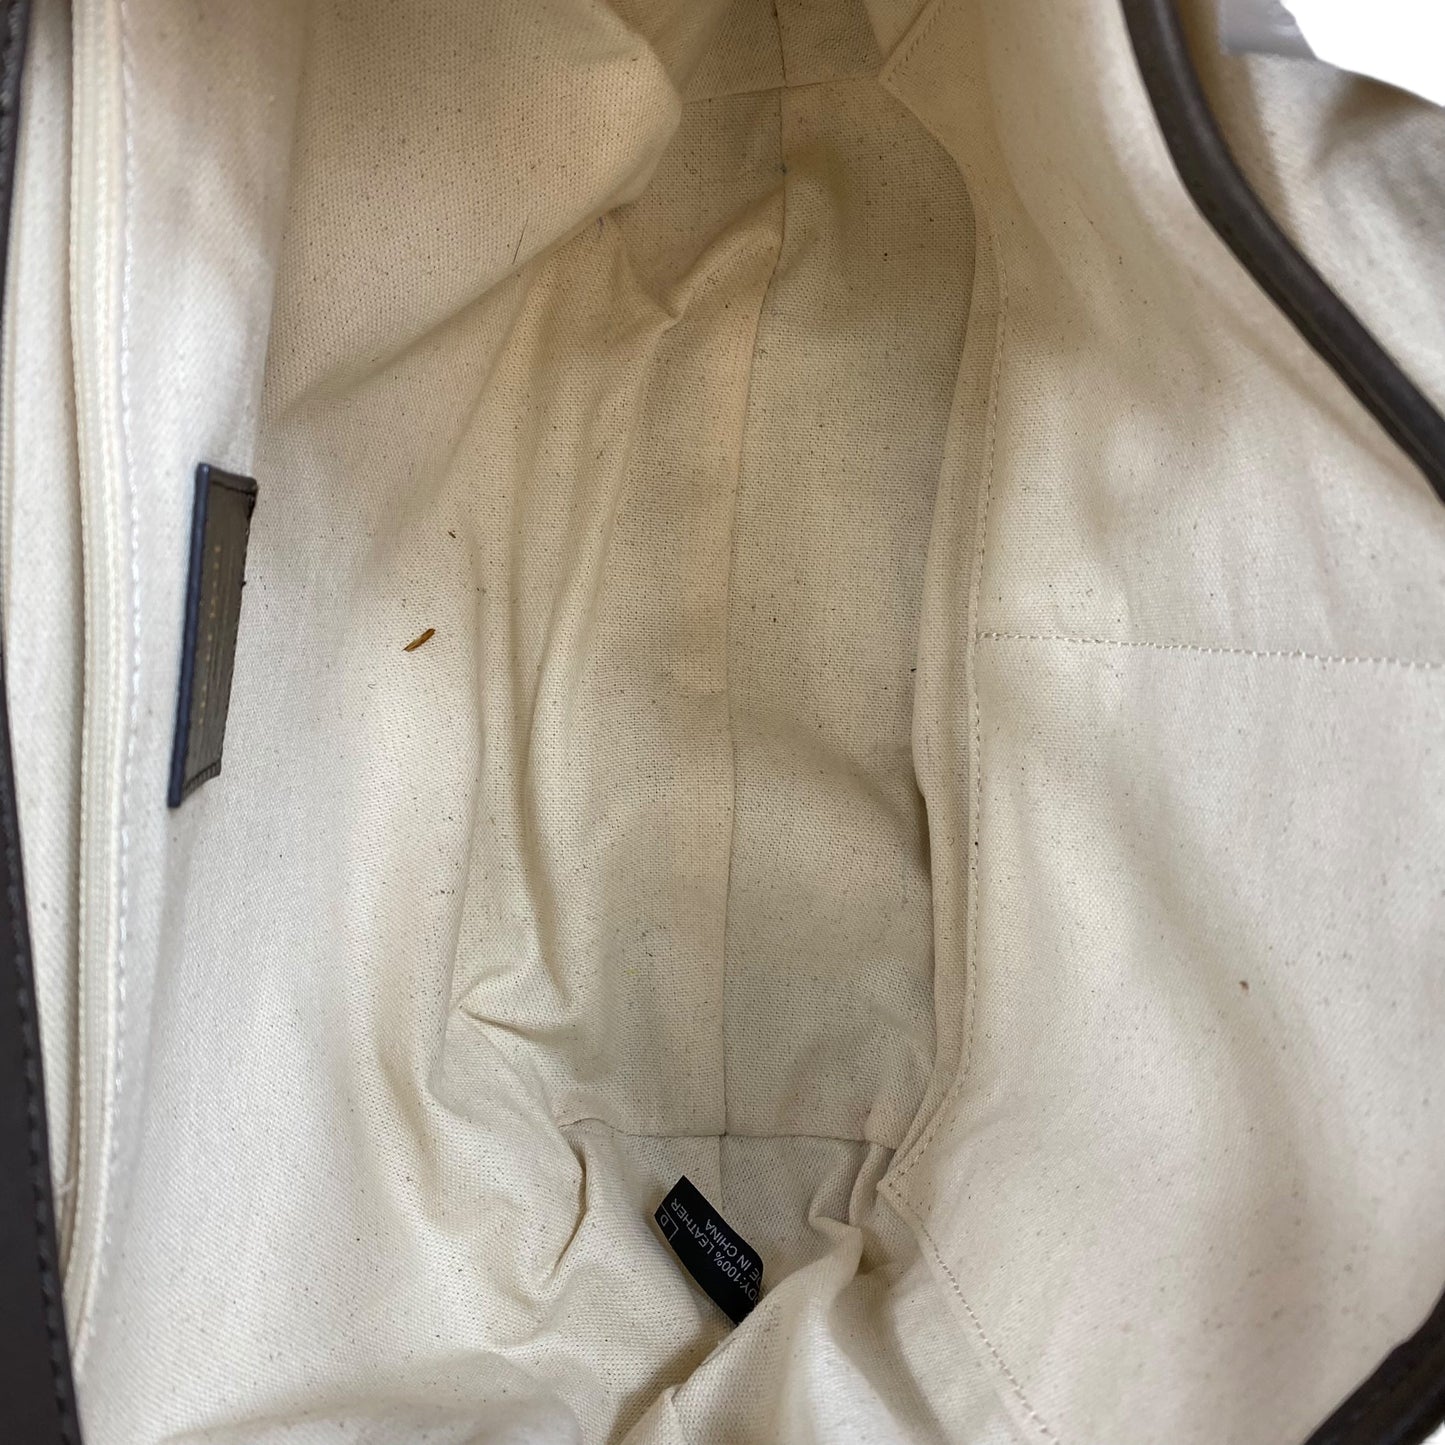 Handbag Leather By Margot  Size: Medium